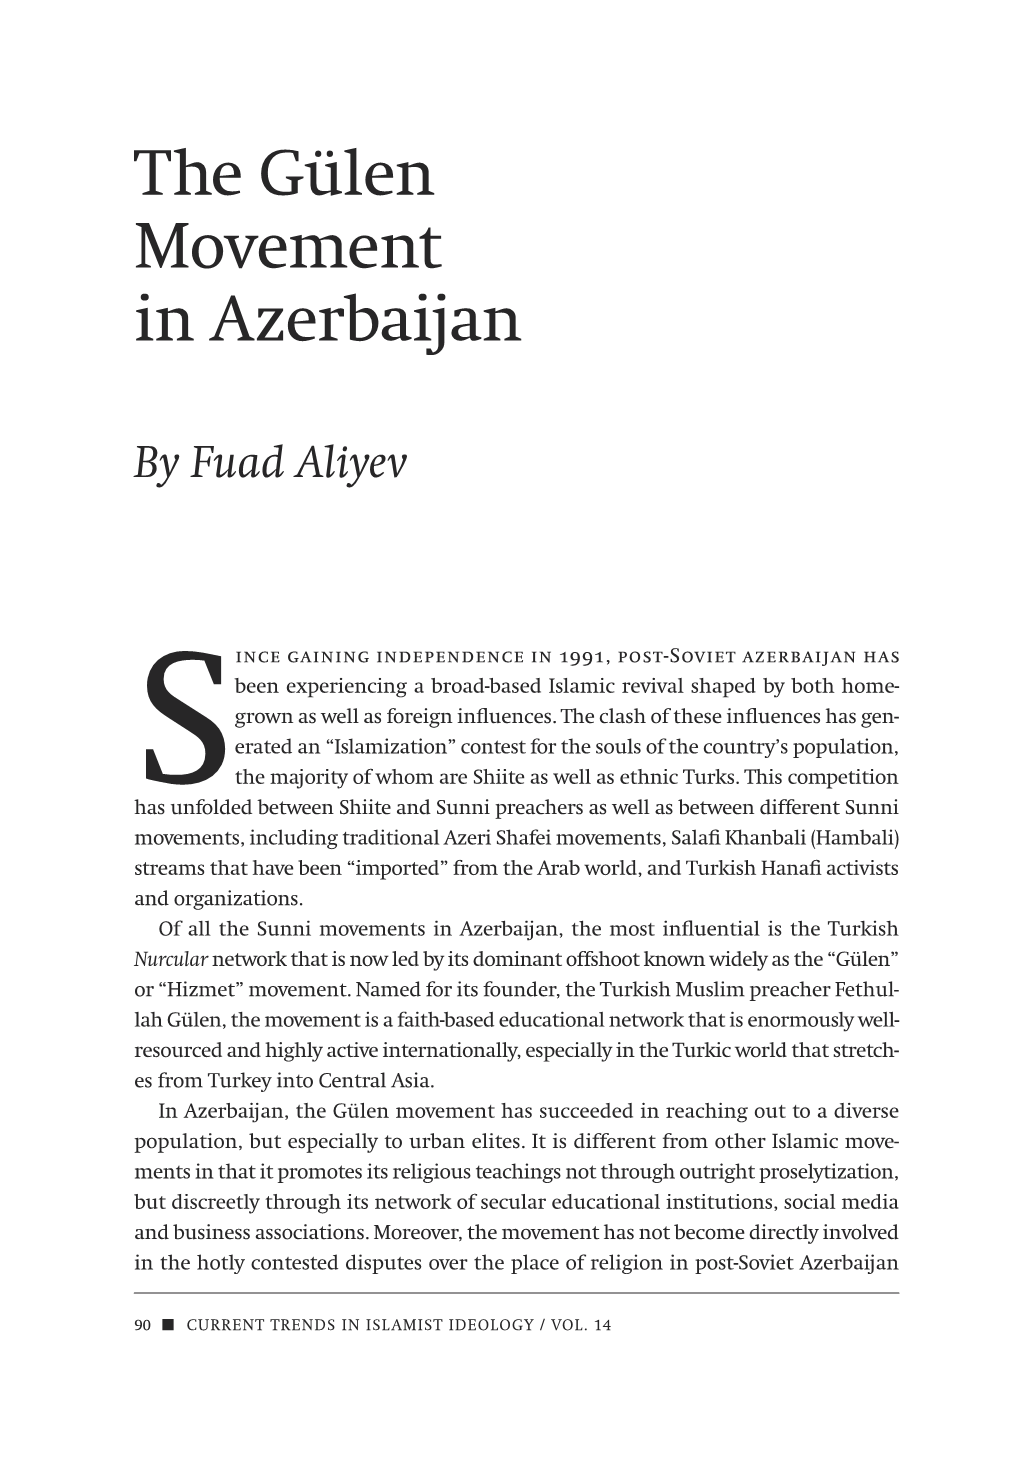 The Gülen Movement in Azerbaijan